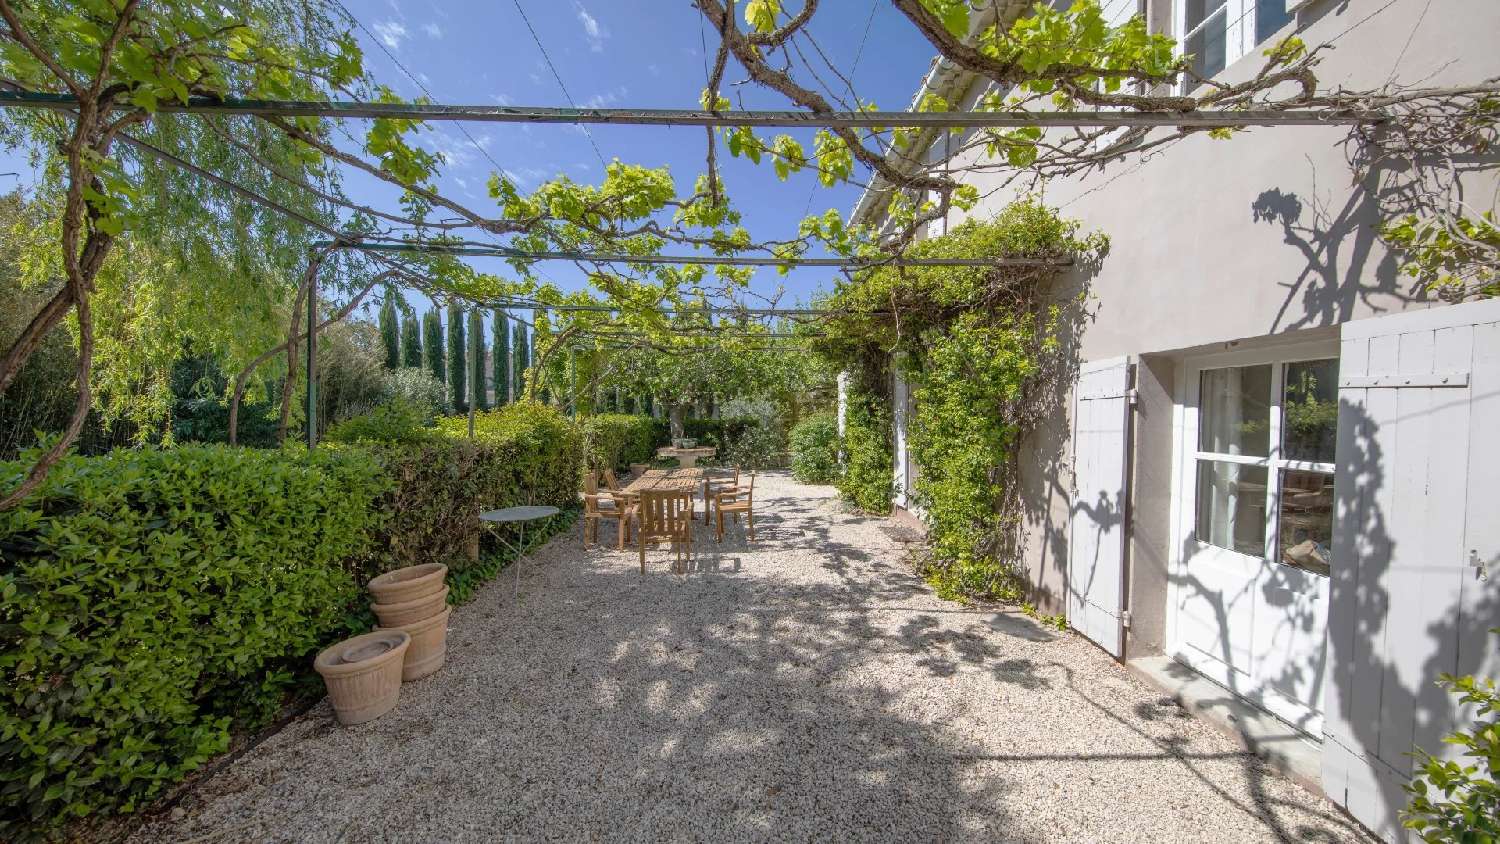  à vendre villa Mouriès Bouches-du-Rhône 3